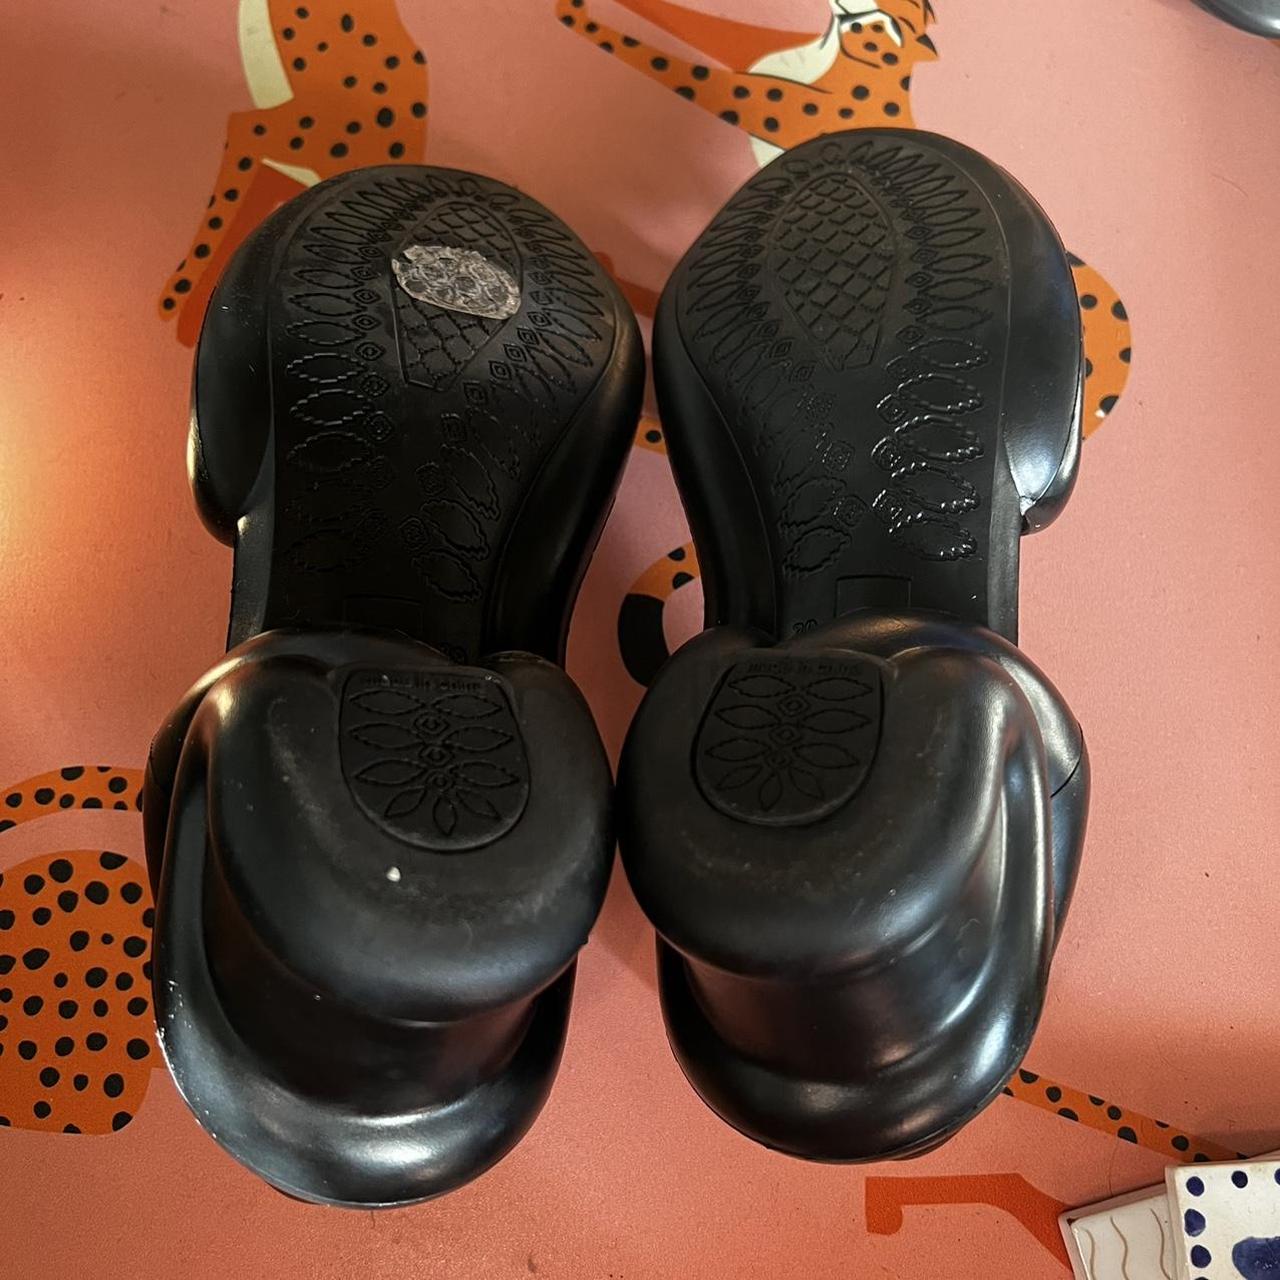 Product Image 3 - Black Camper Kobarah Heels
These shoes